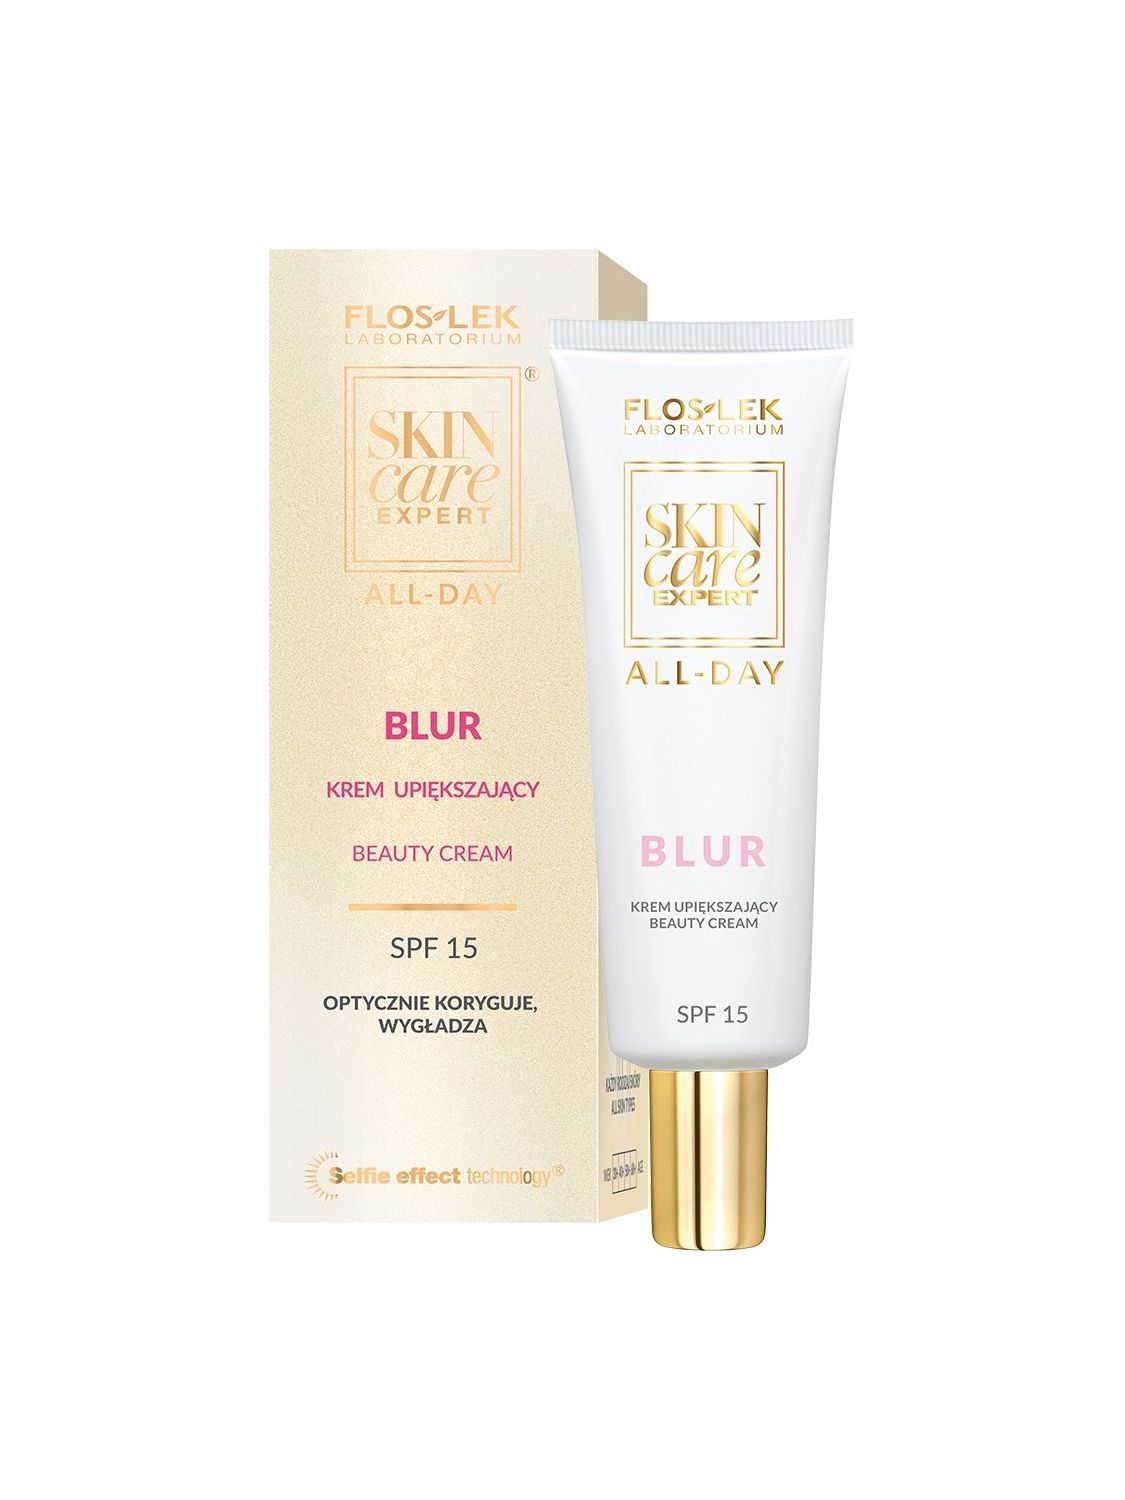 SKIN CARE EXPERT® ALL-DAY BLUR Beauty cream SPF 15 - 50 ml - Floslek